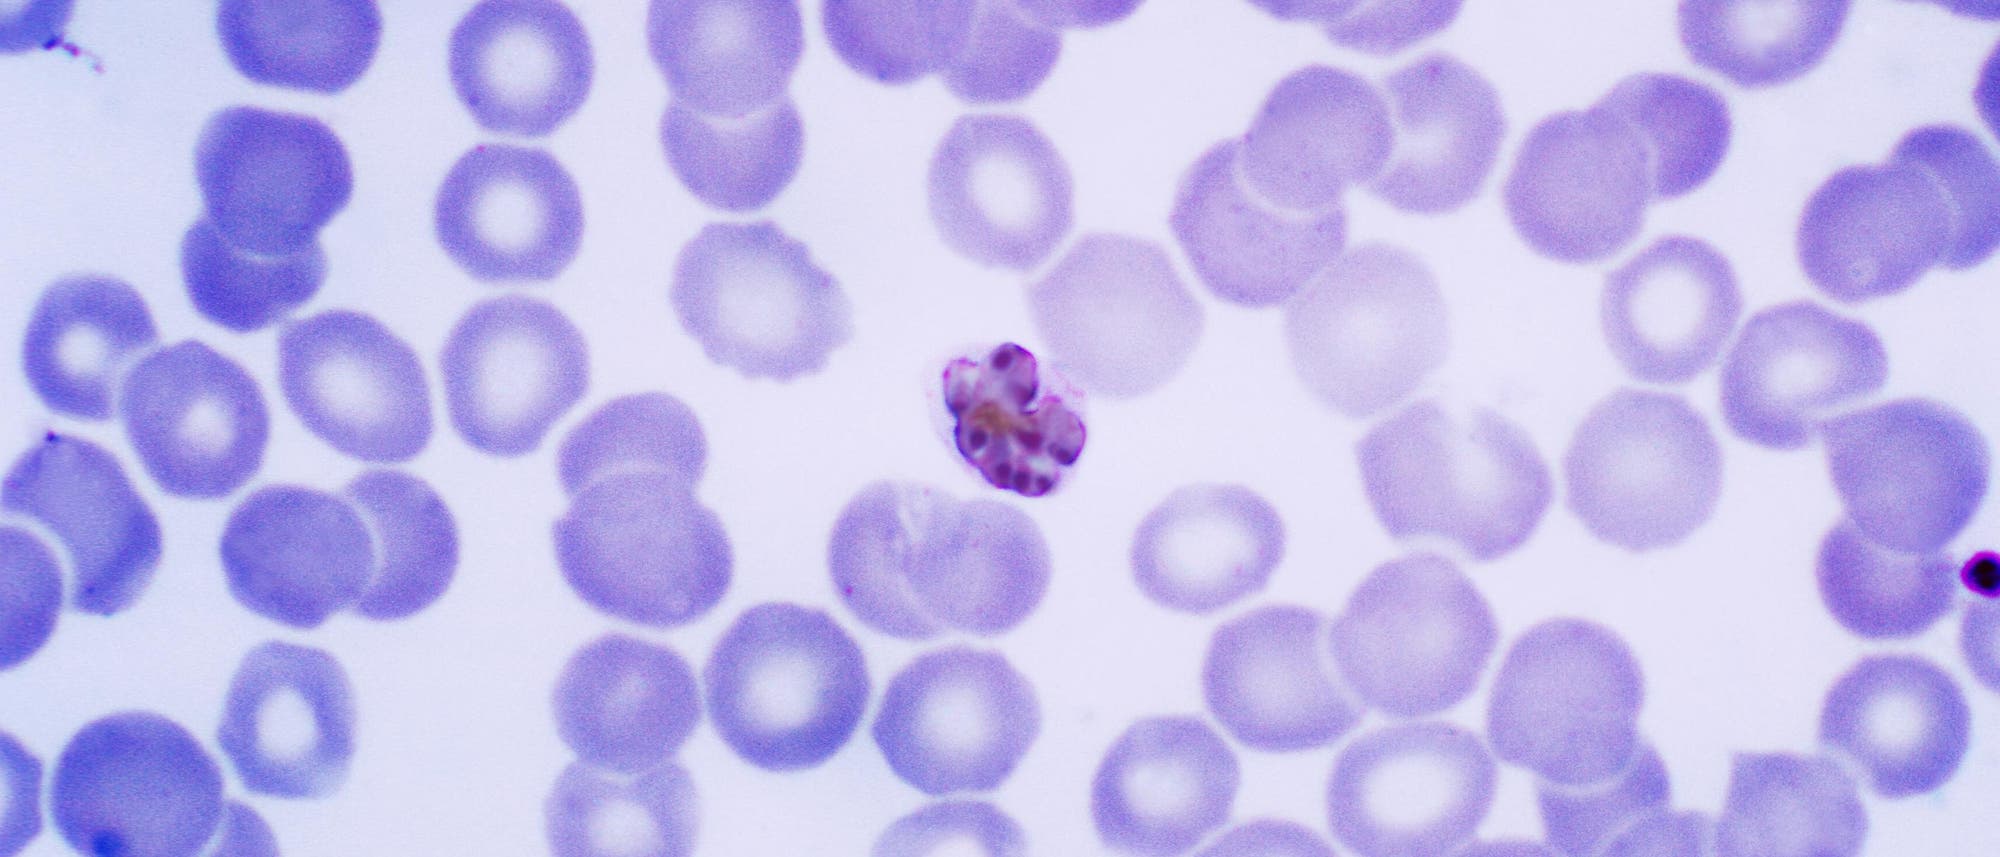 Malaria-Parasiten in roten Blutkörperchen